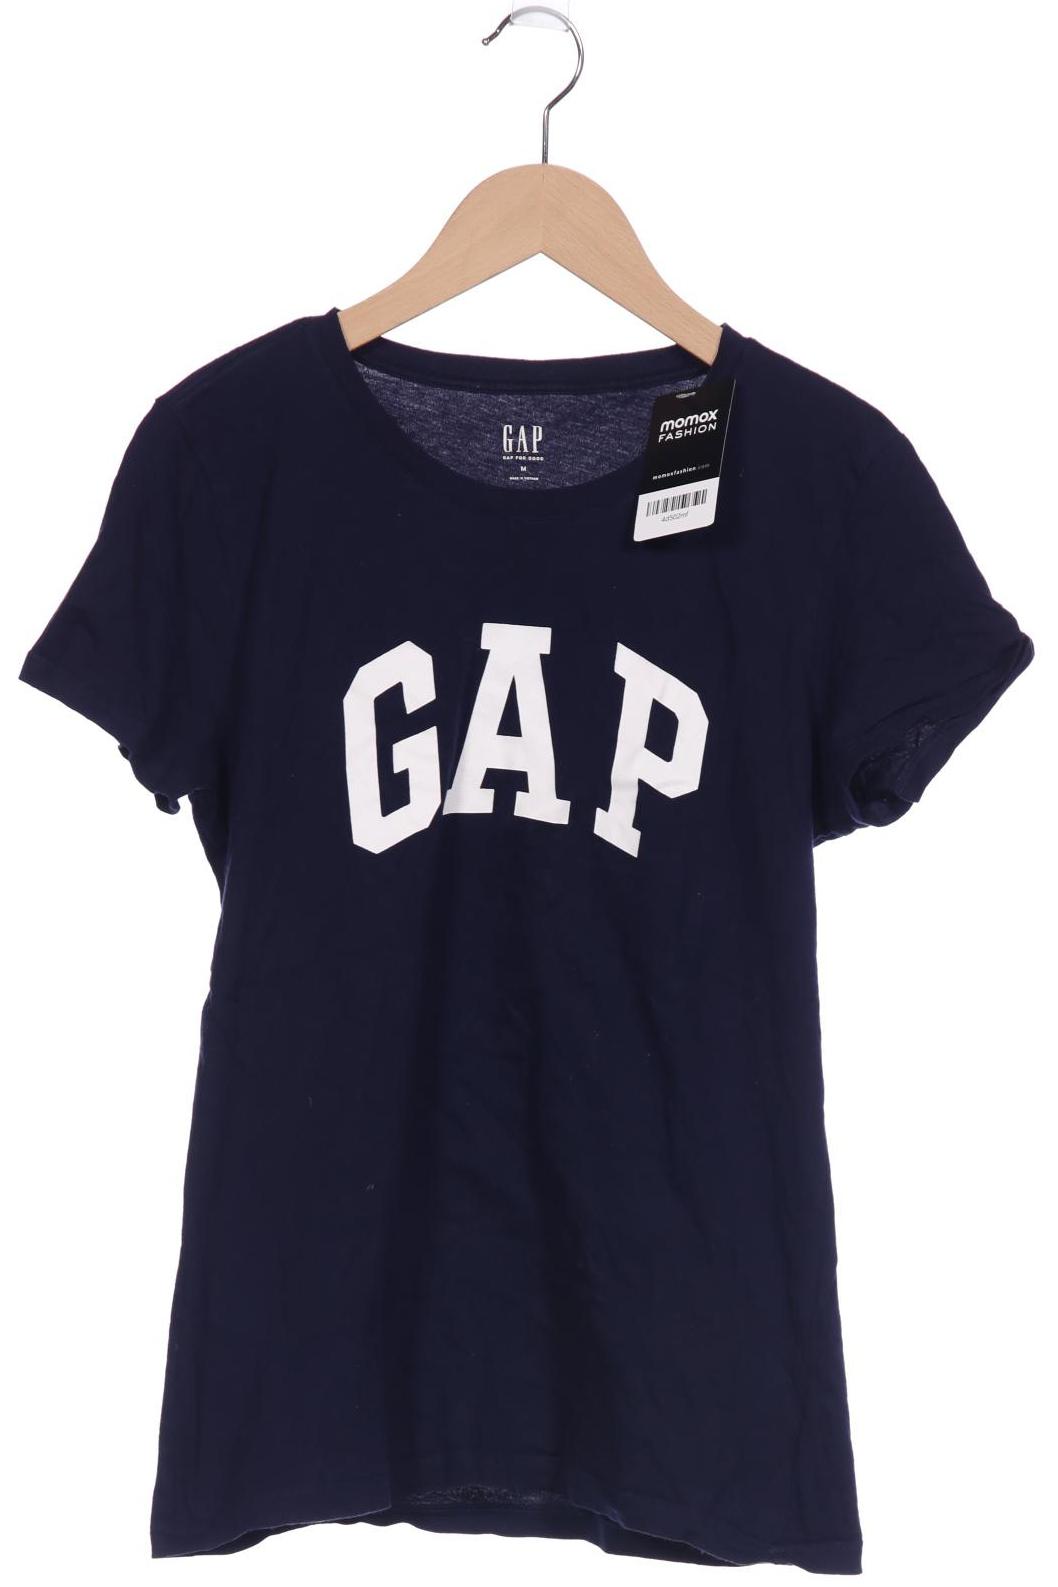 GAP Damen T-Shirt, marineblau von GAP